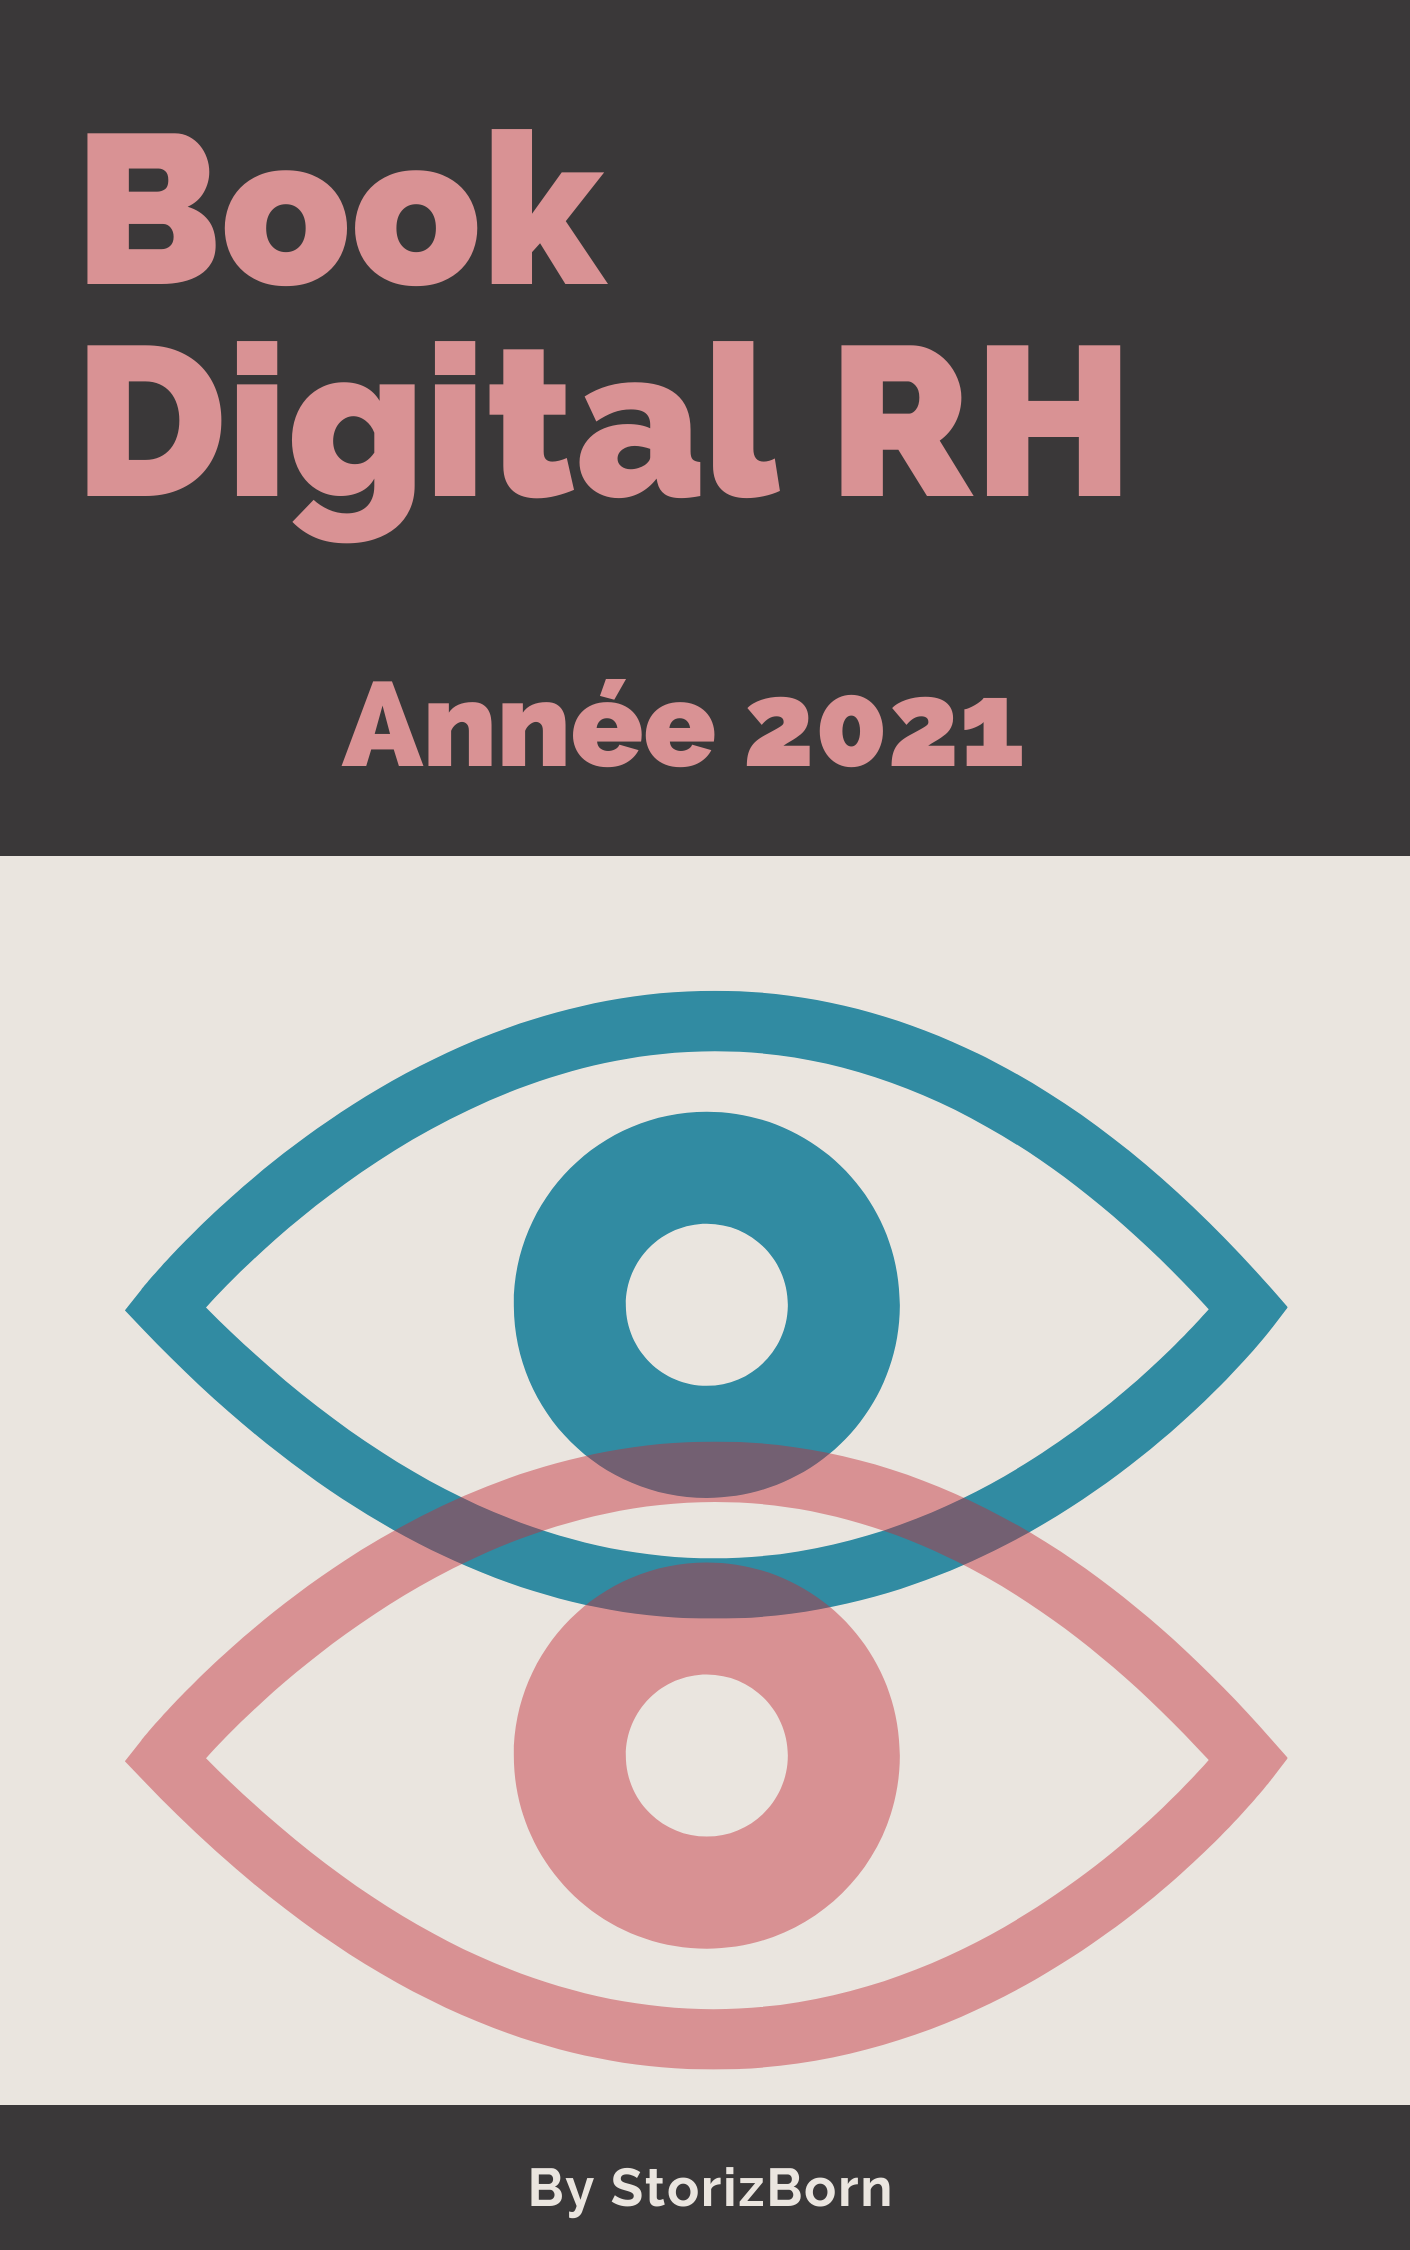  Book digital RH 2021.png 